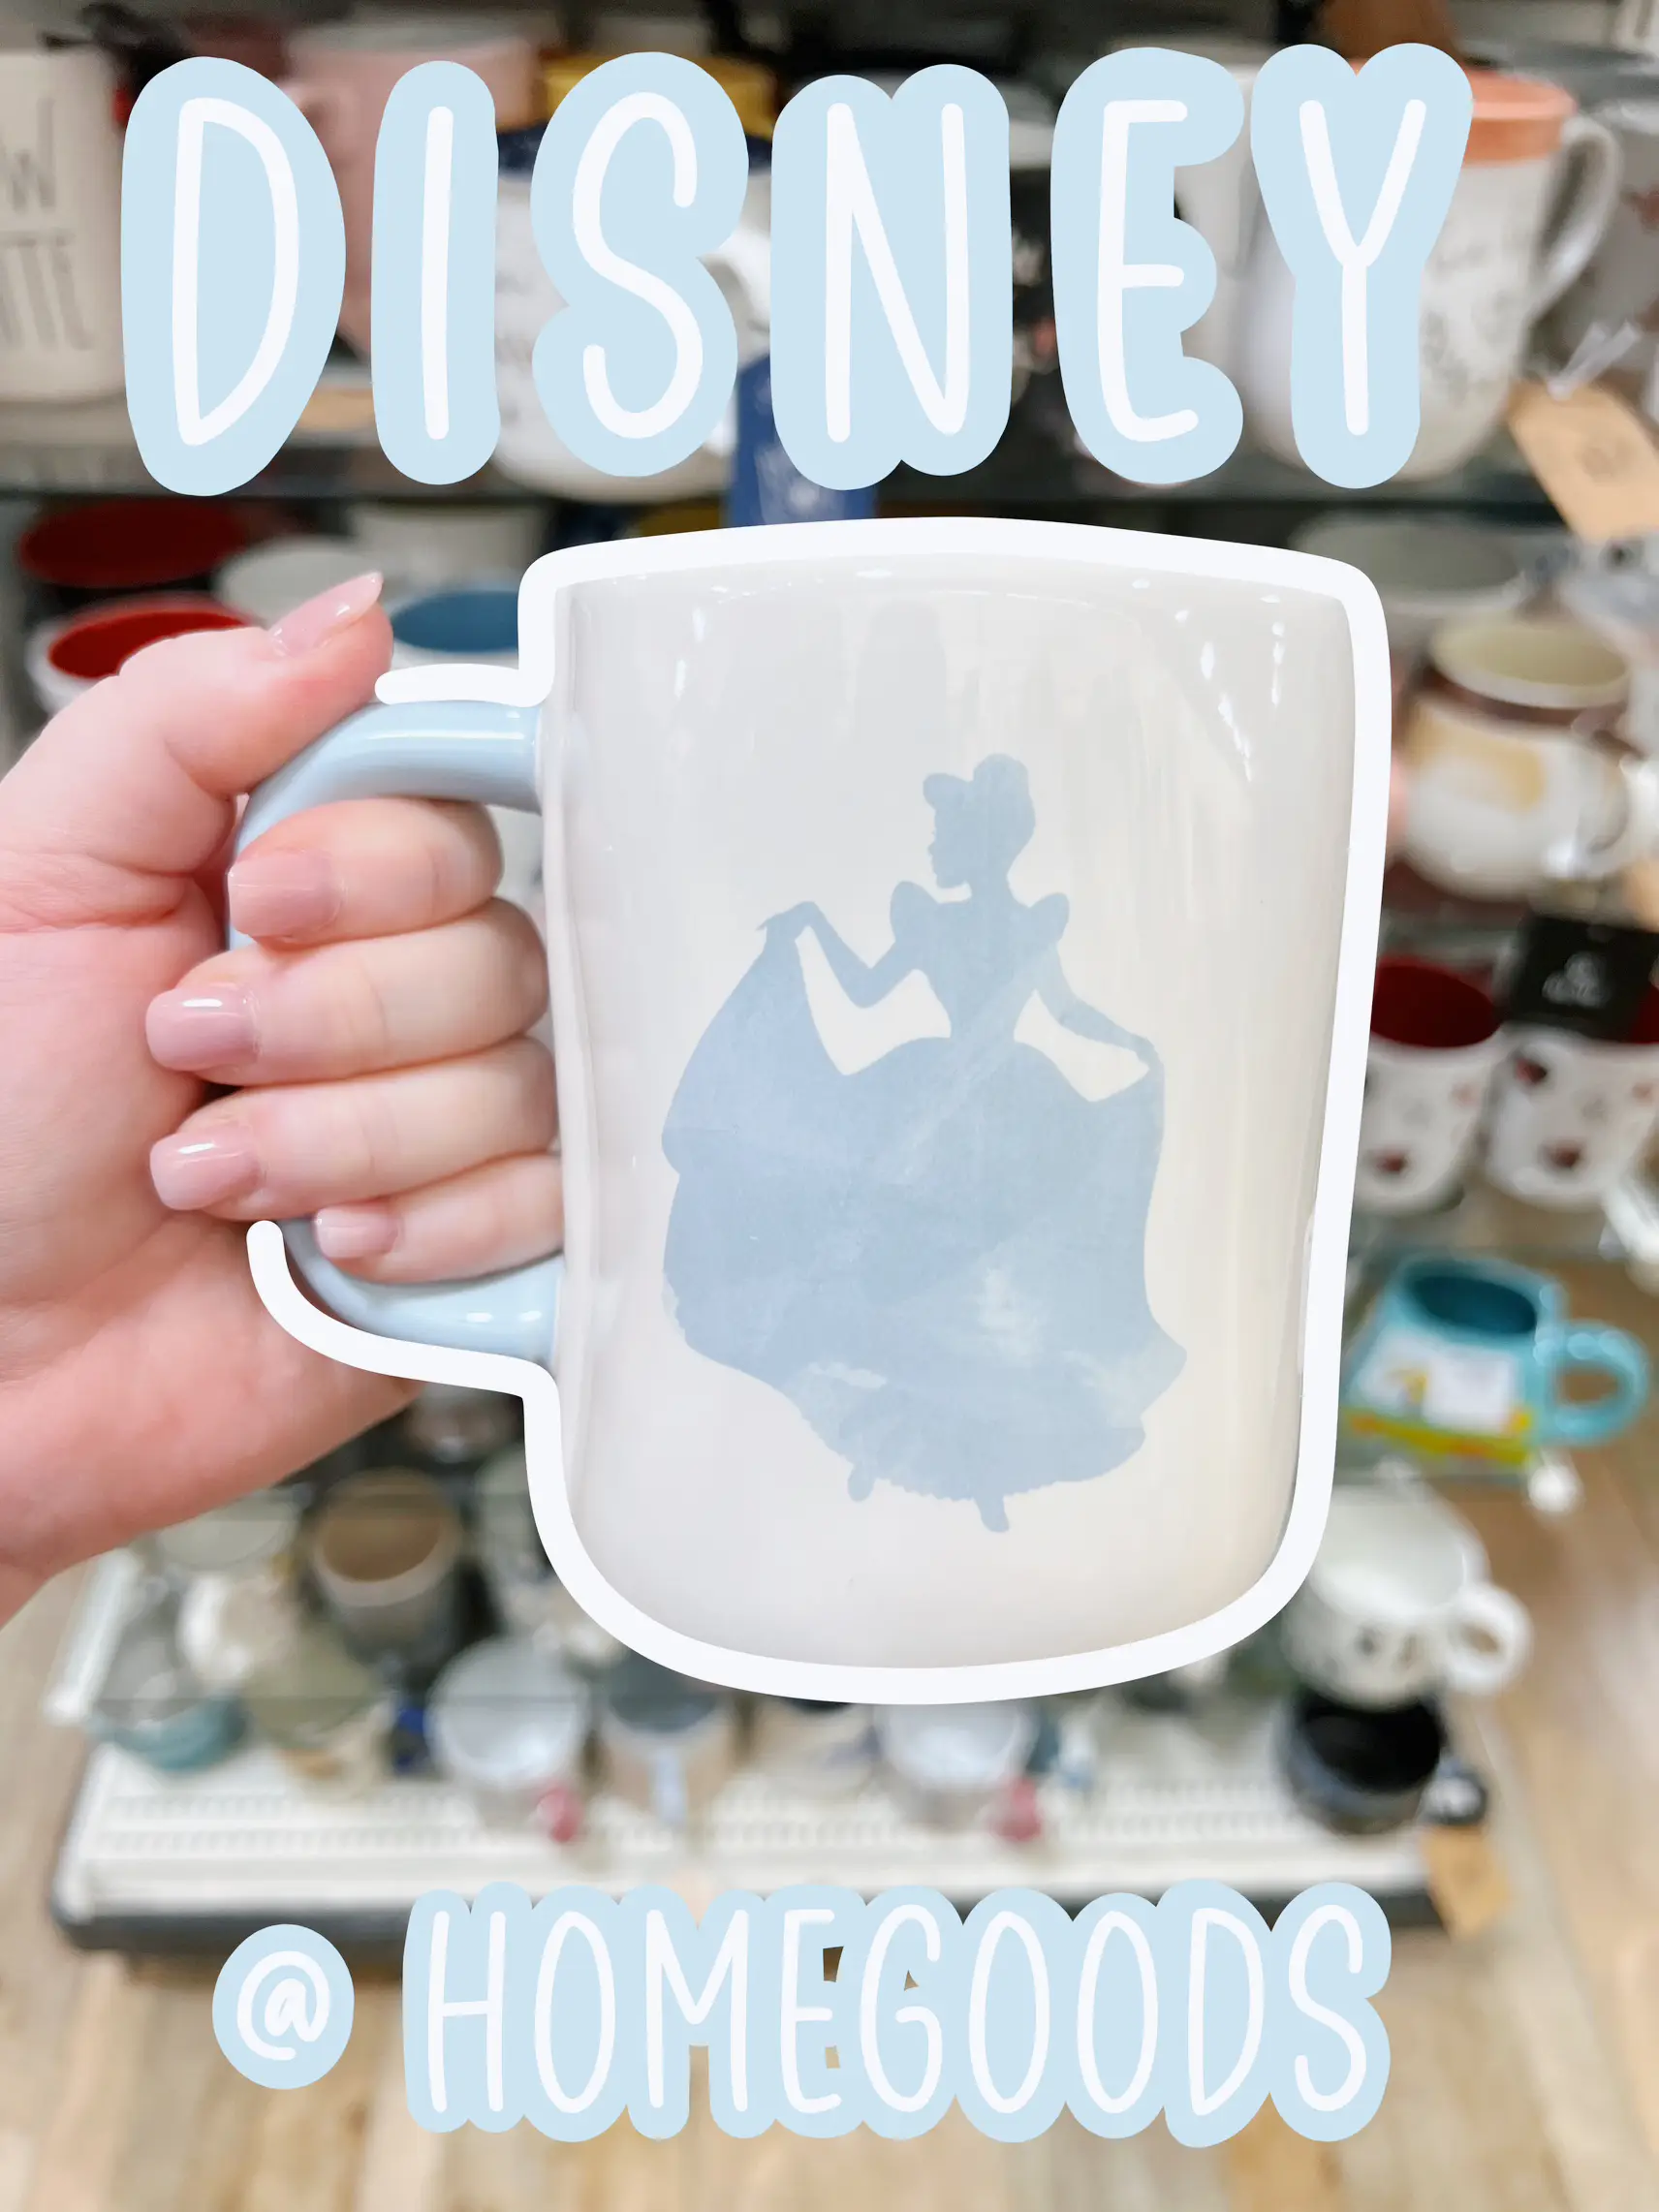 DLR - Disney Home - Character Calligraphy “Disneyland” Mug — USShoppingSOS